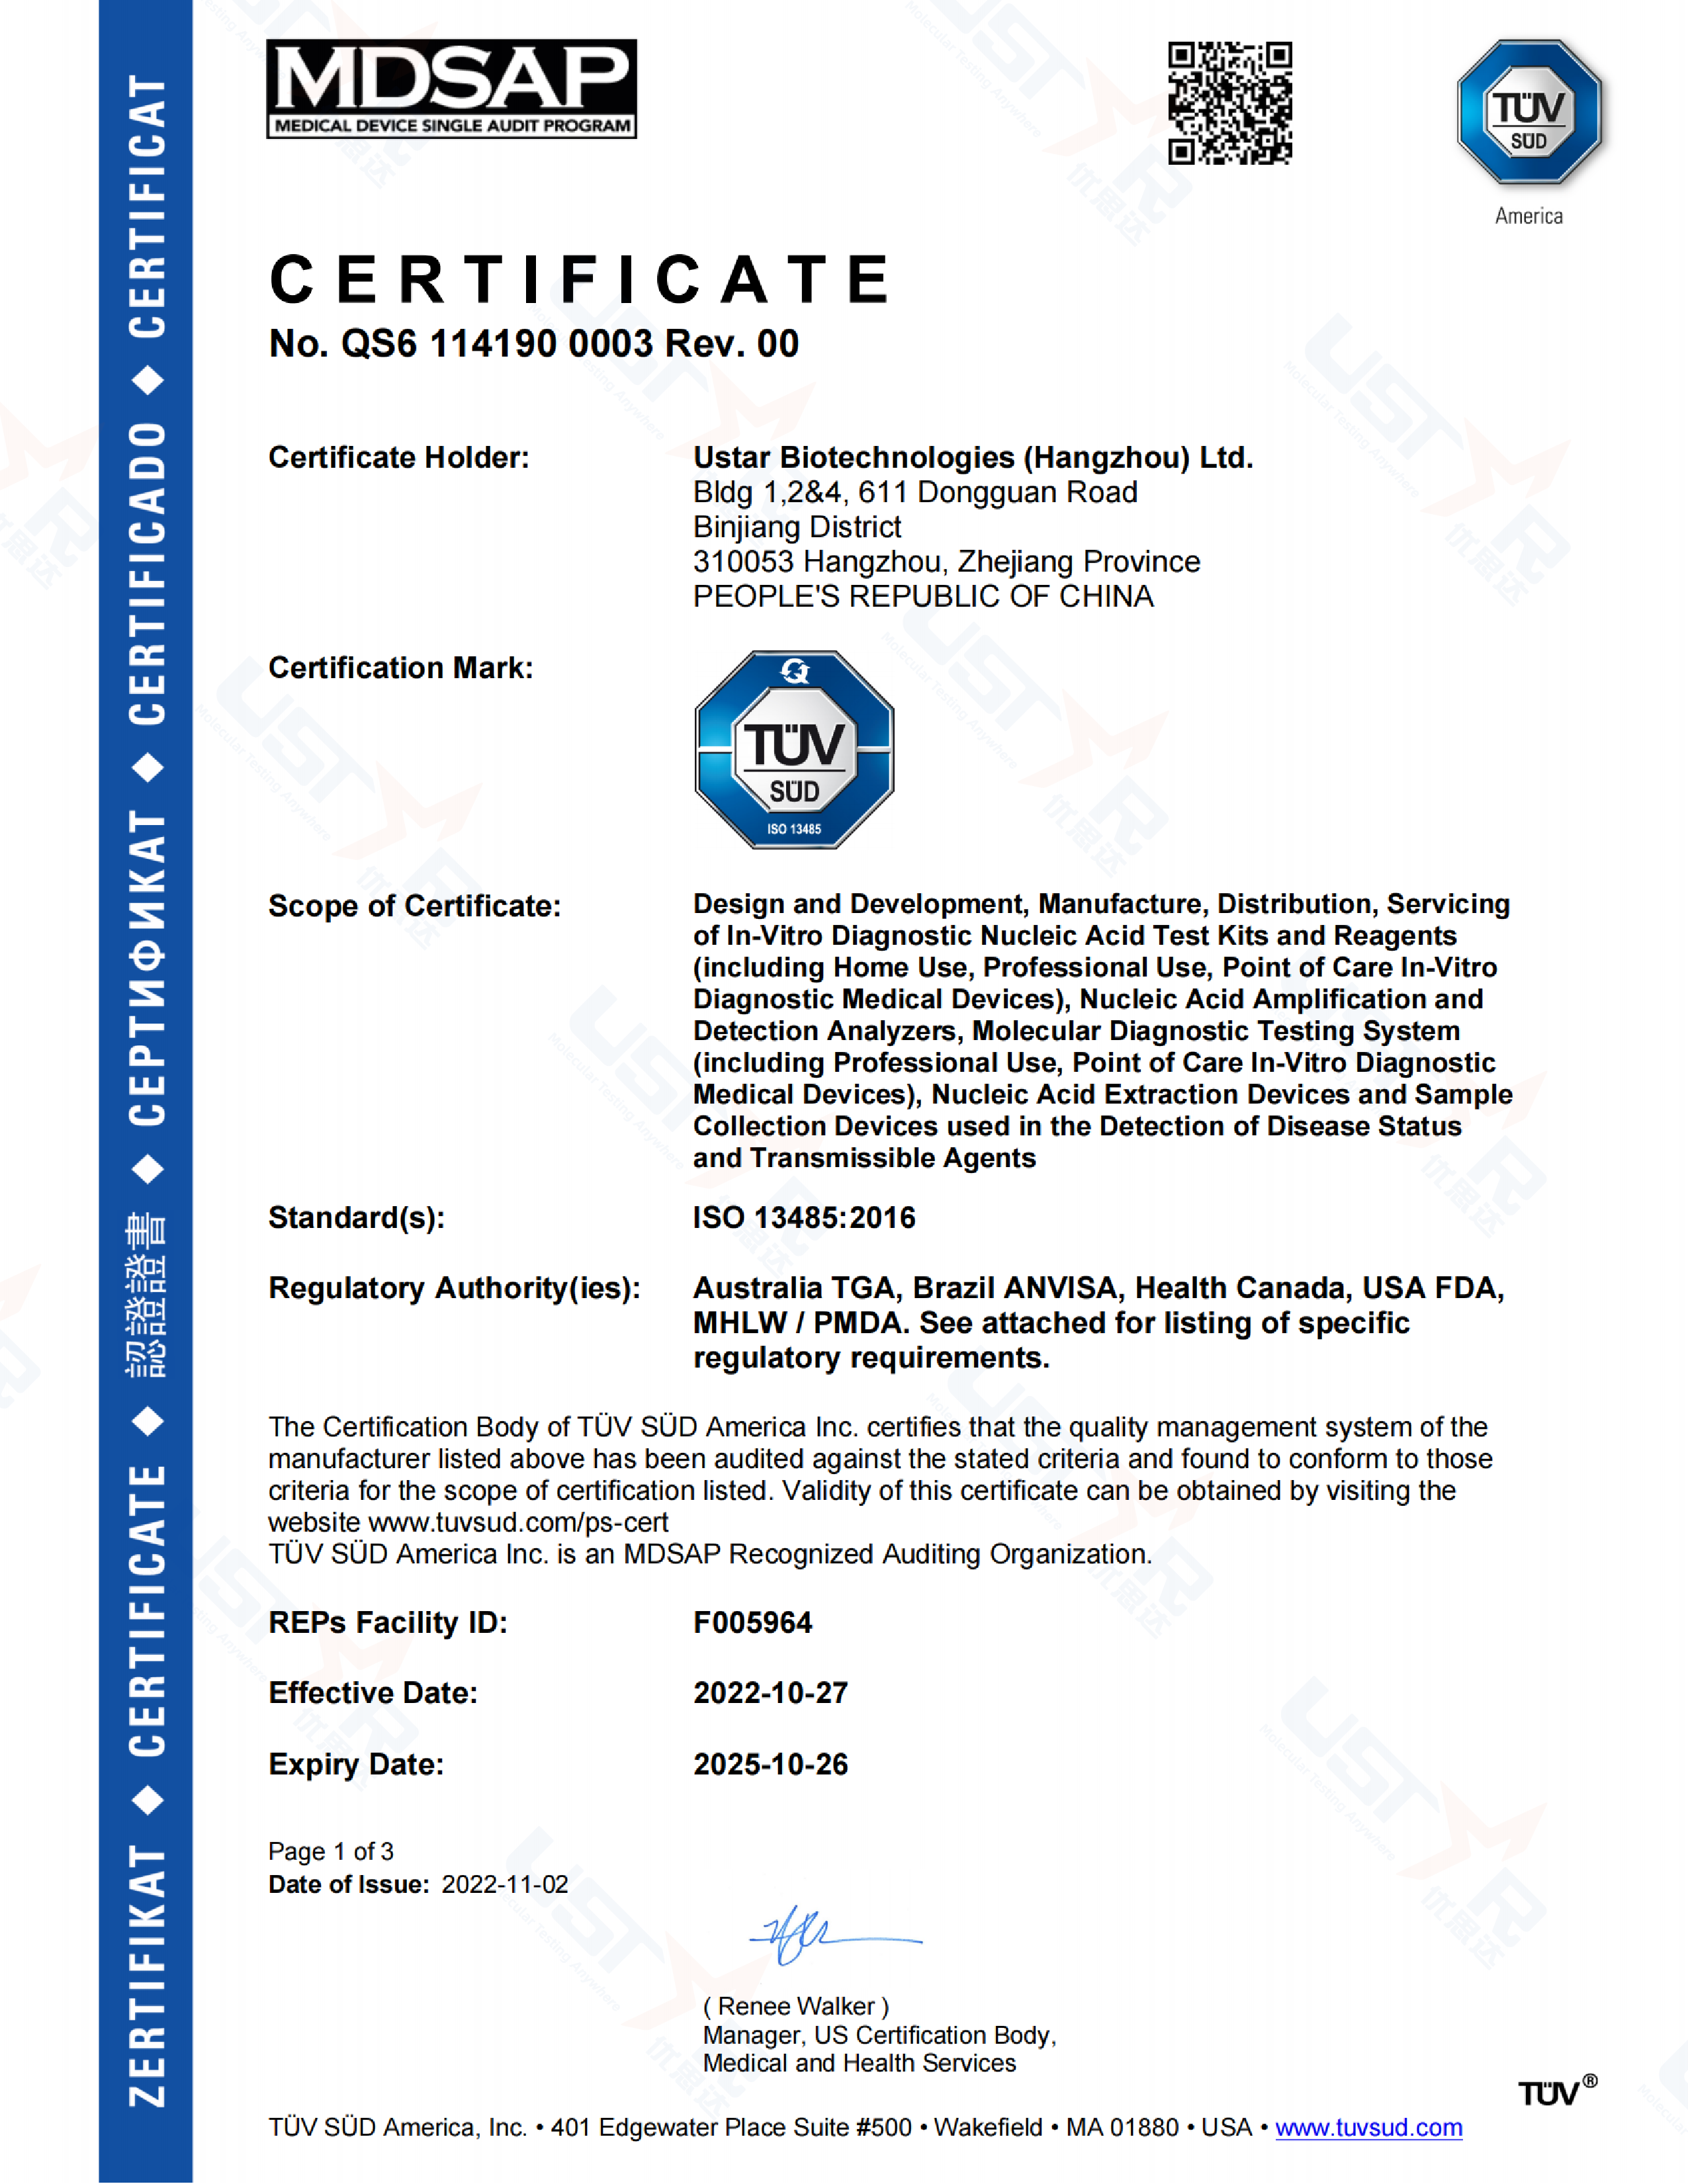 MDSAP Certificate Obtained! 